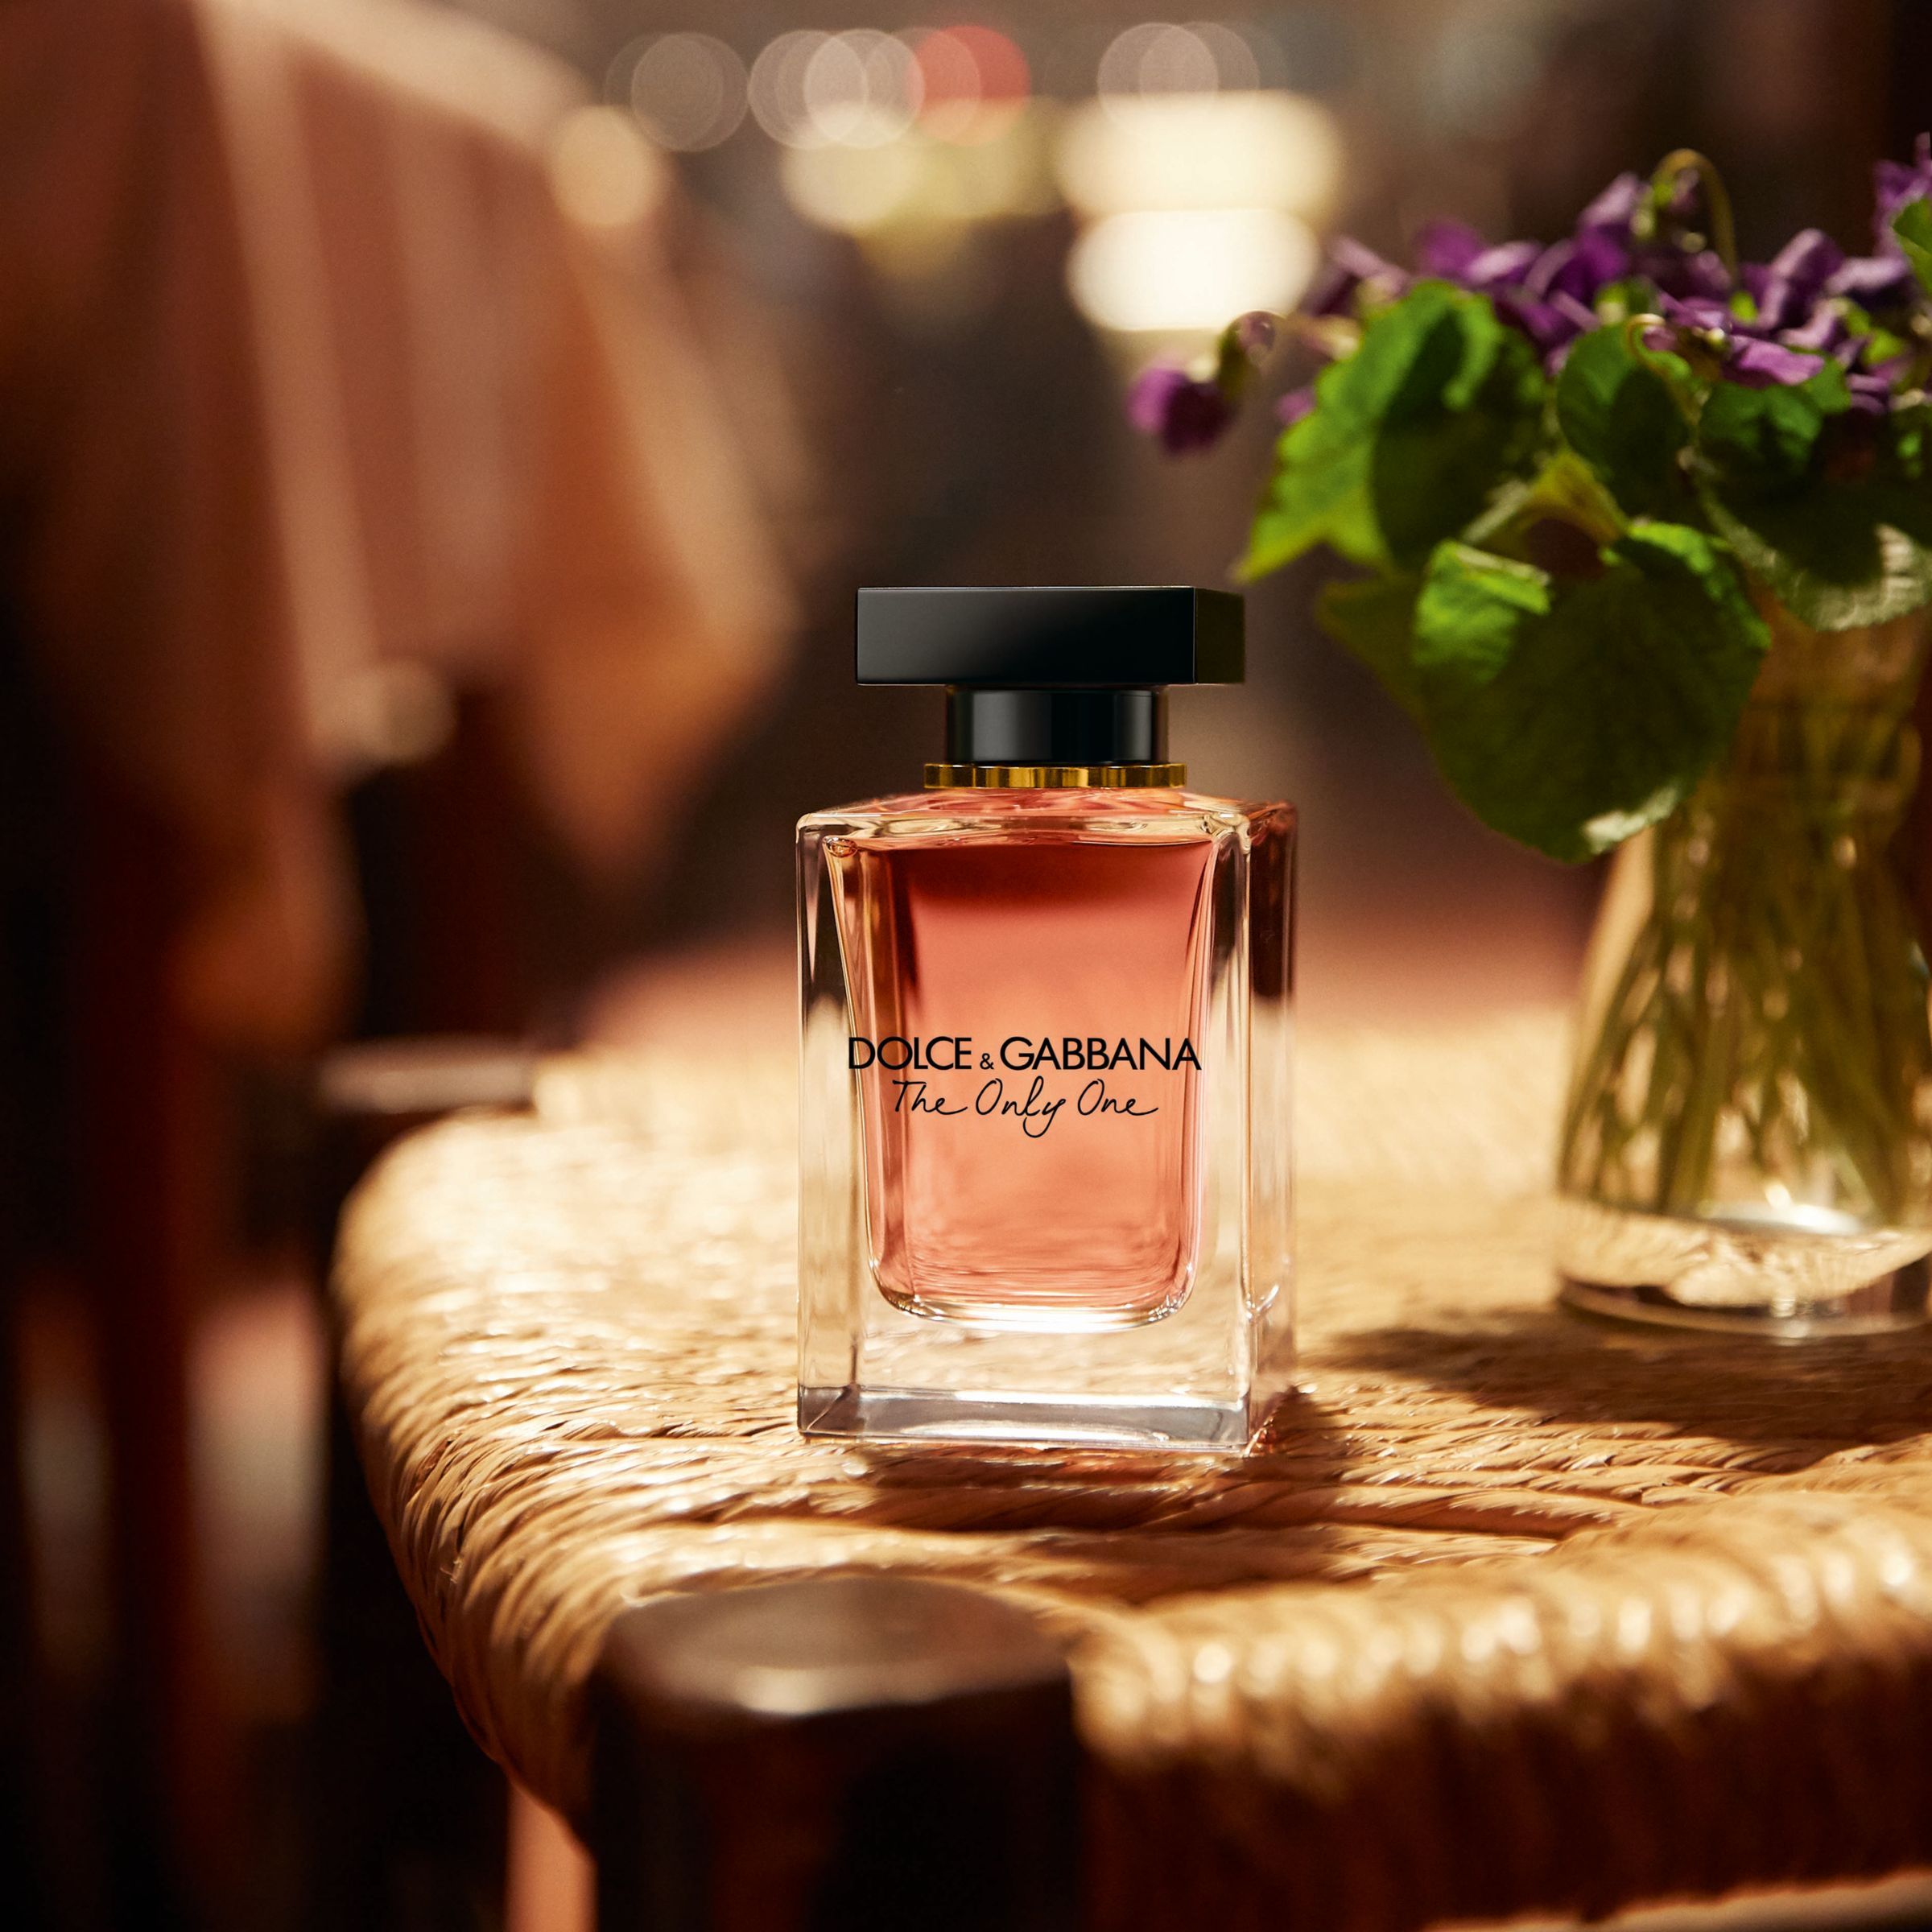 Dolce &amp; Gabbana The Only One Eau De Parfum, 50ml